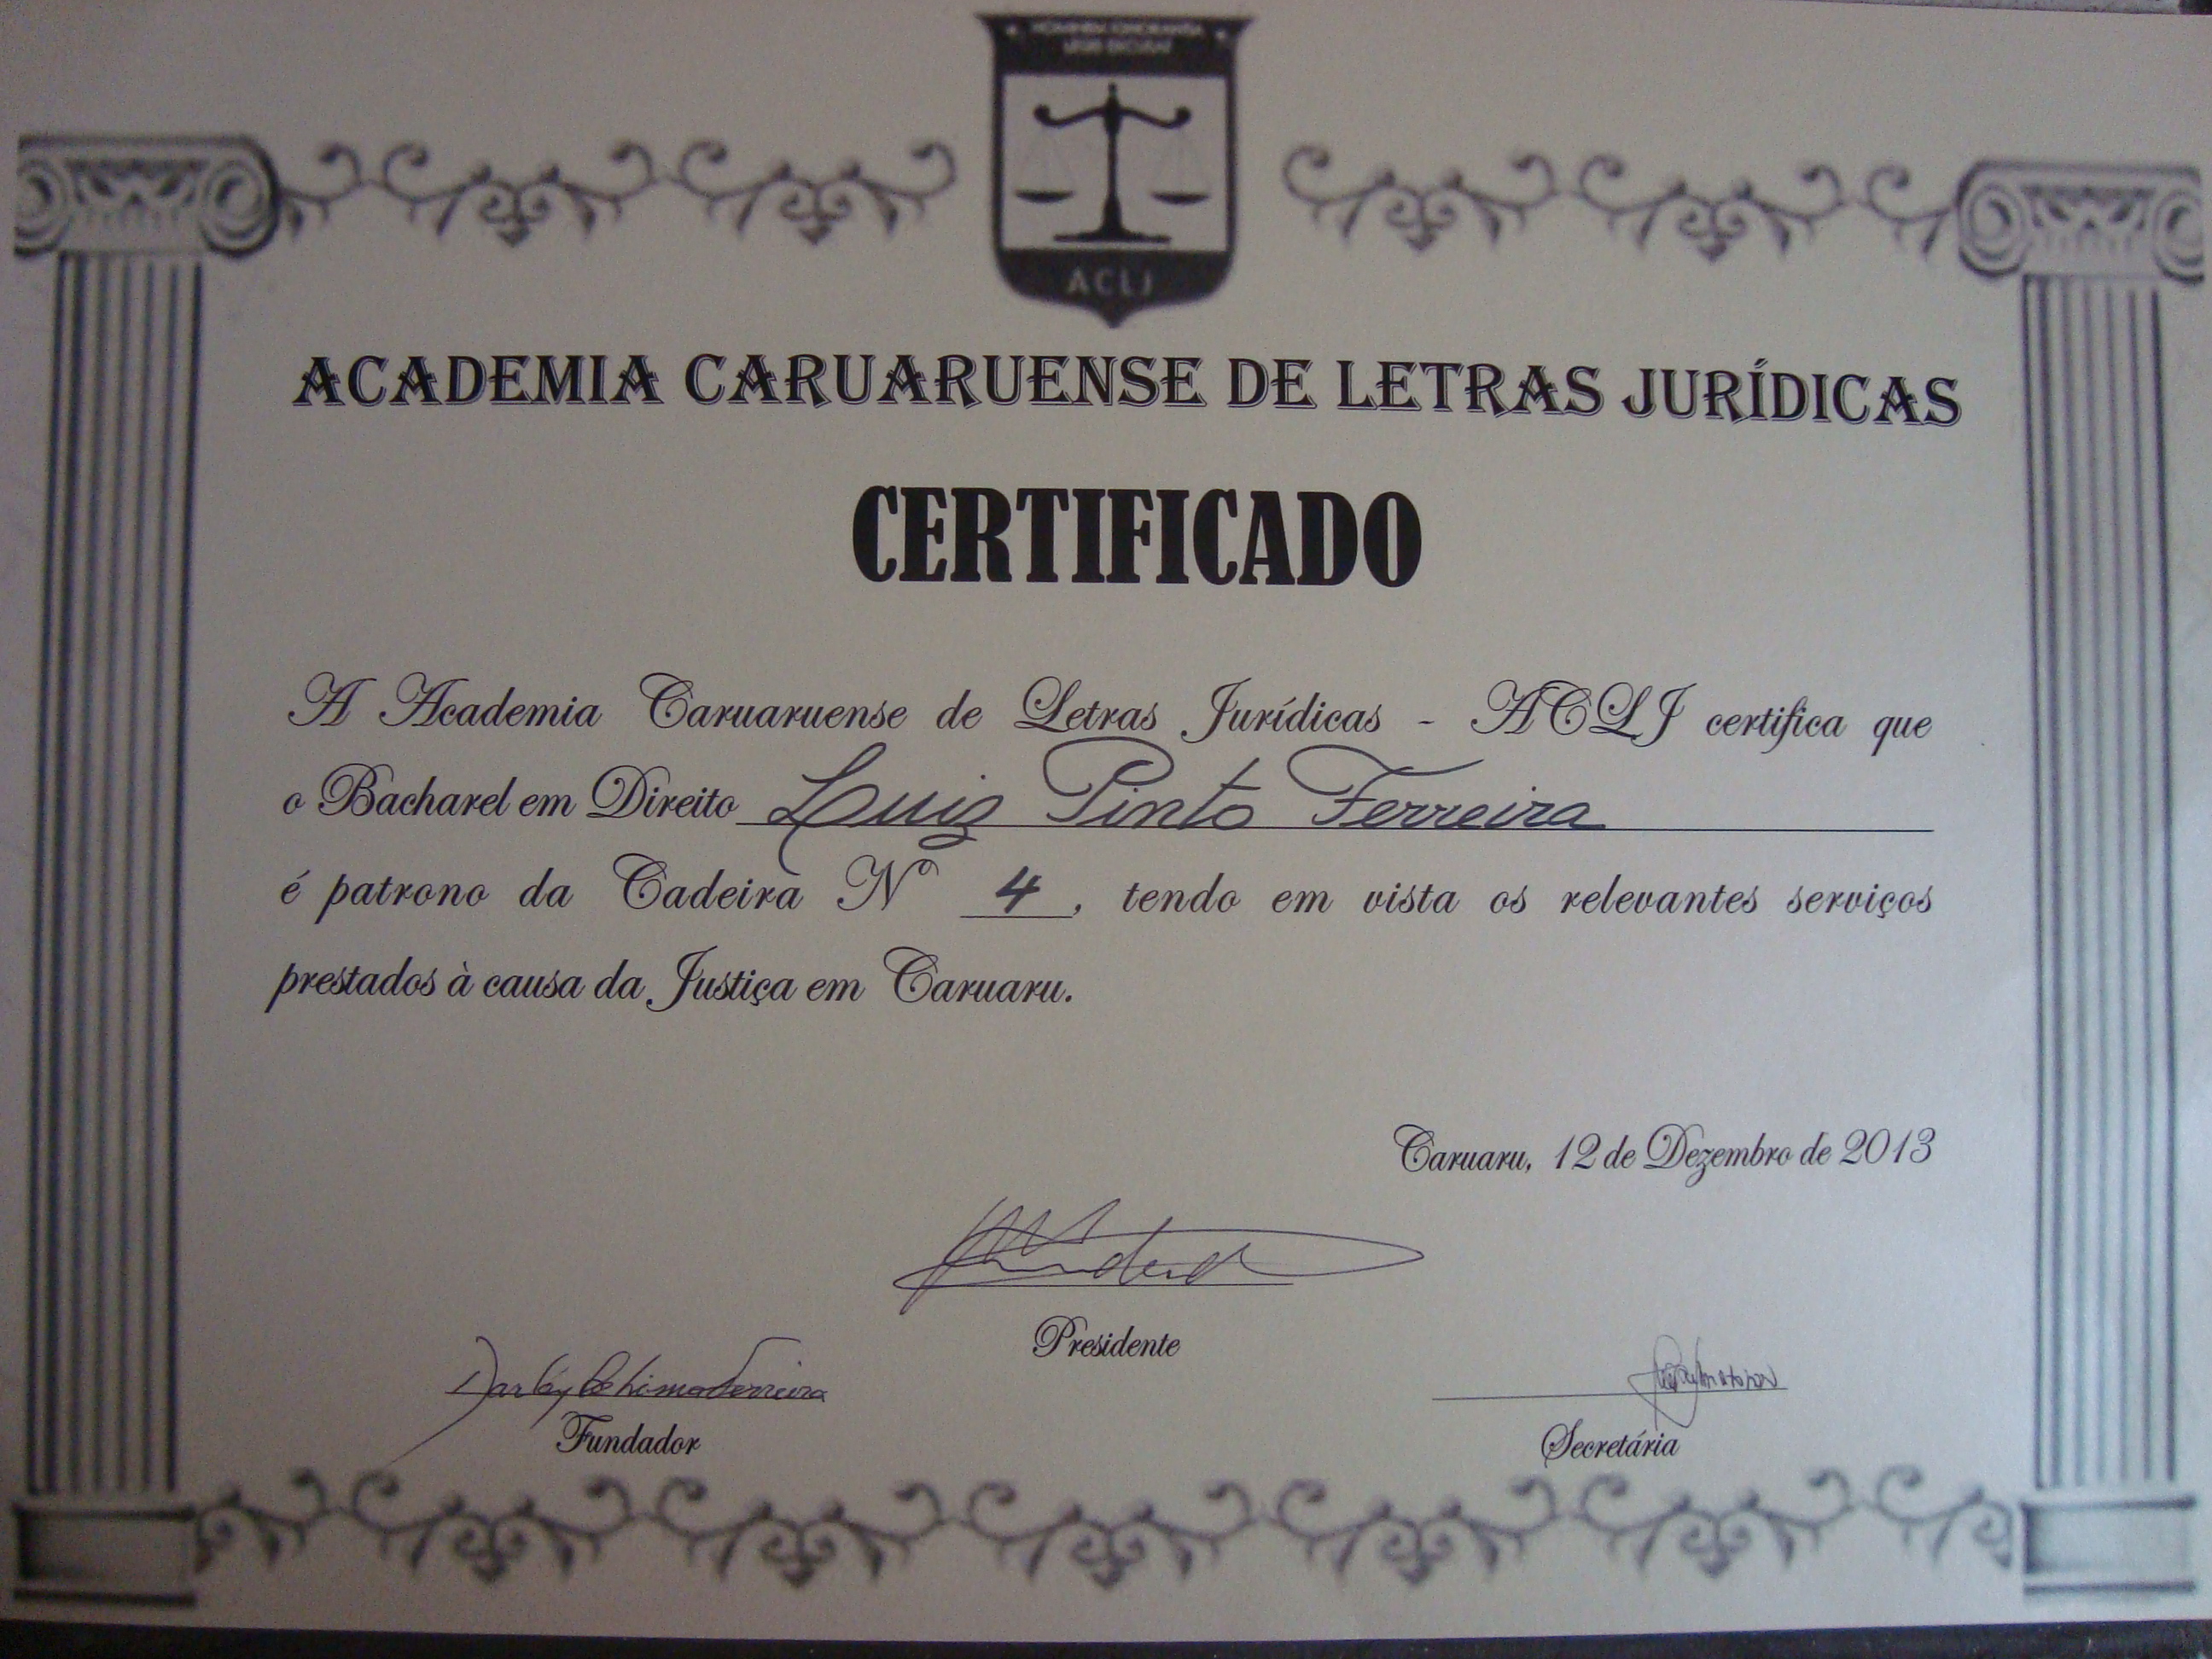 images/Academia_caruaruense/002_academia_caruaruense.jpg